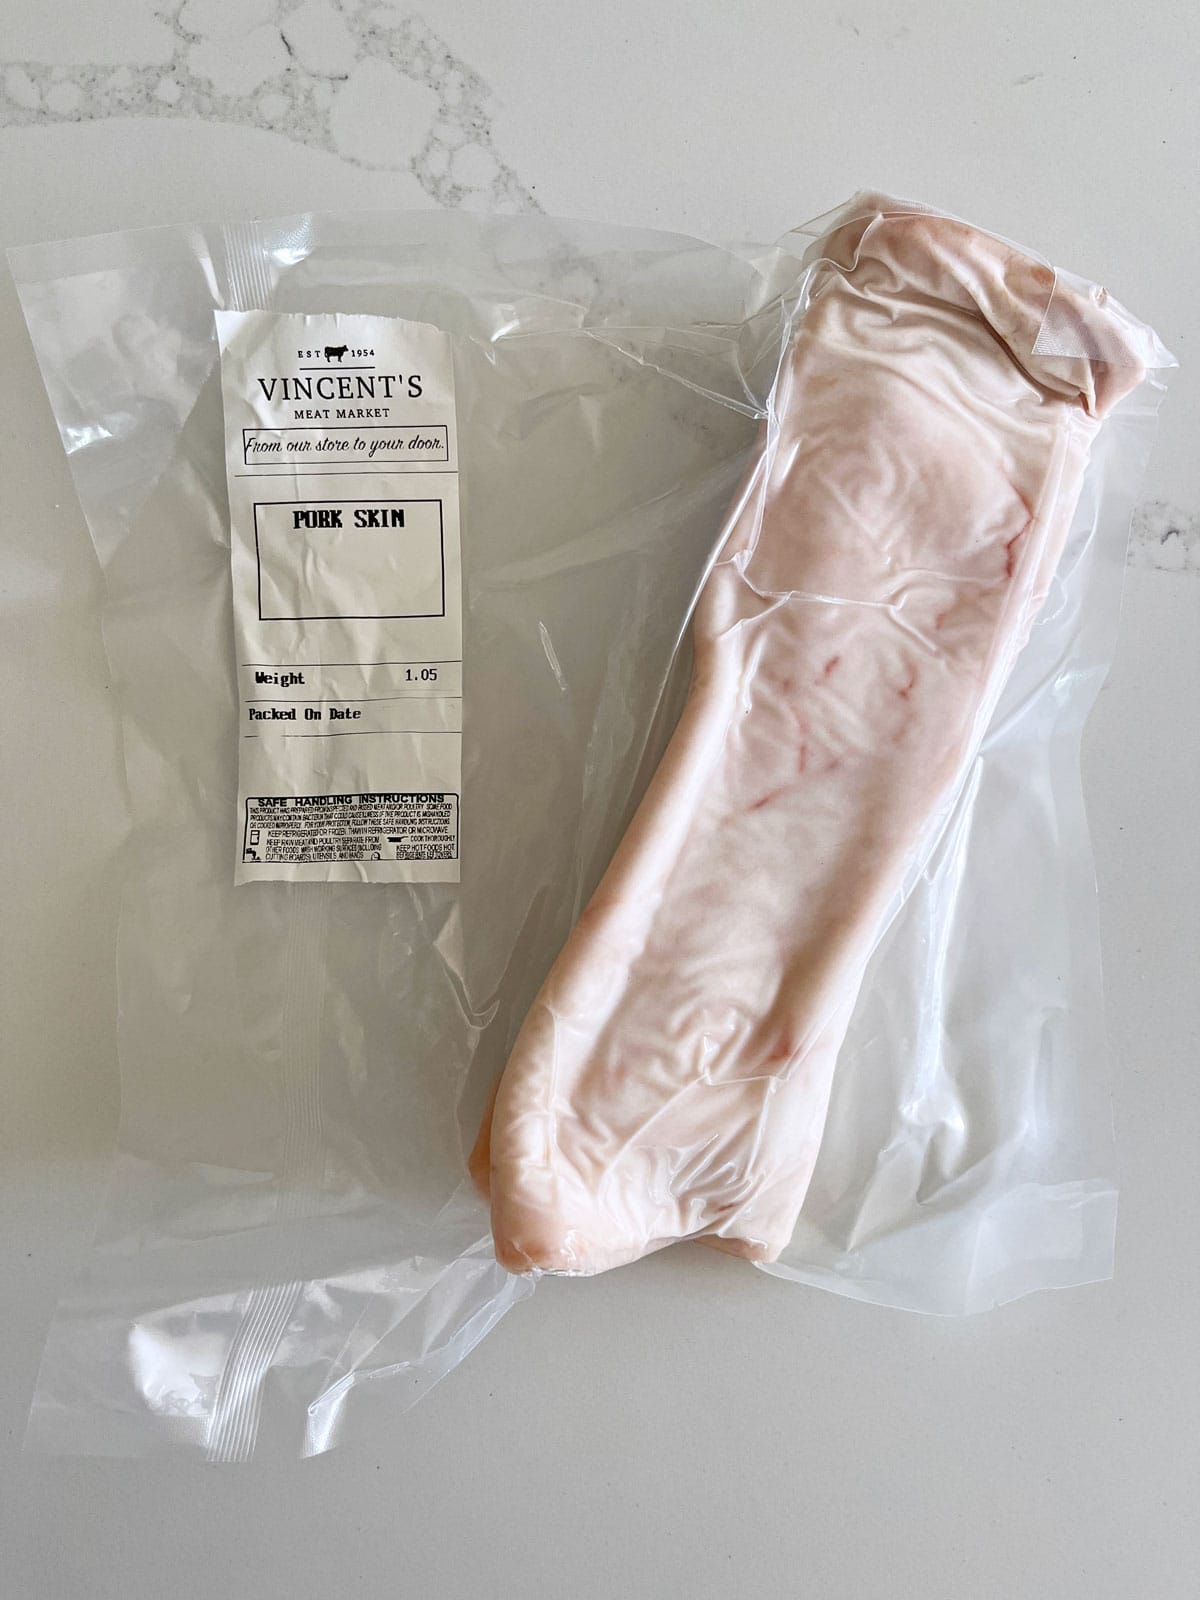 Packaged pork skin.